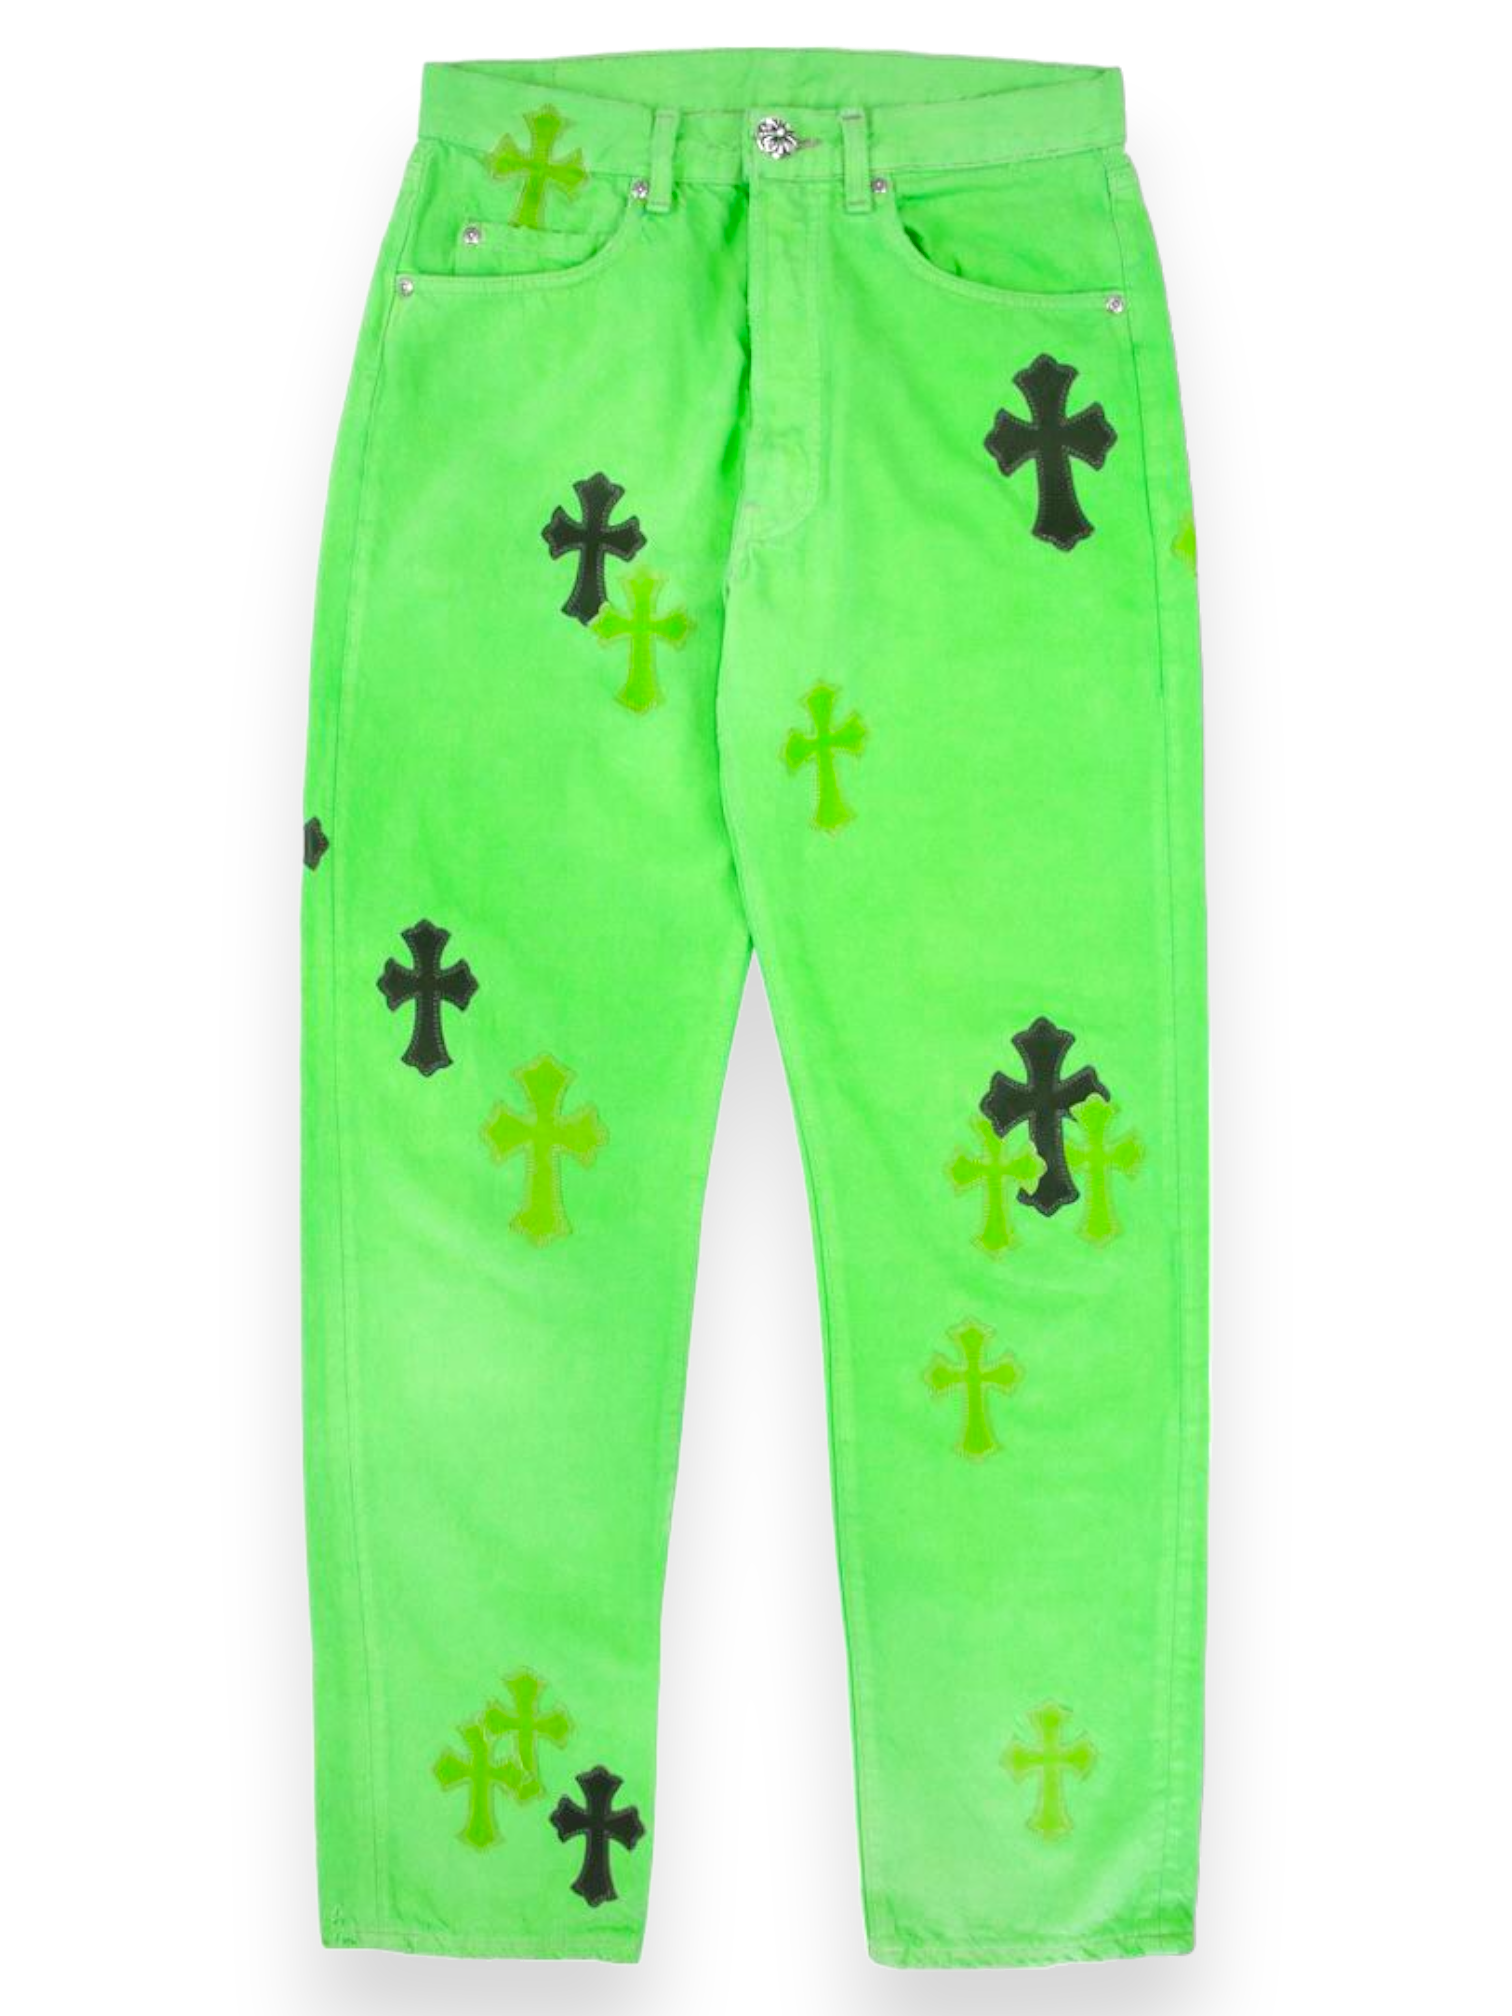 Chrome Hearts Slime Green Black Cross Patch Levi’s Denim Jeans